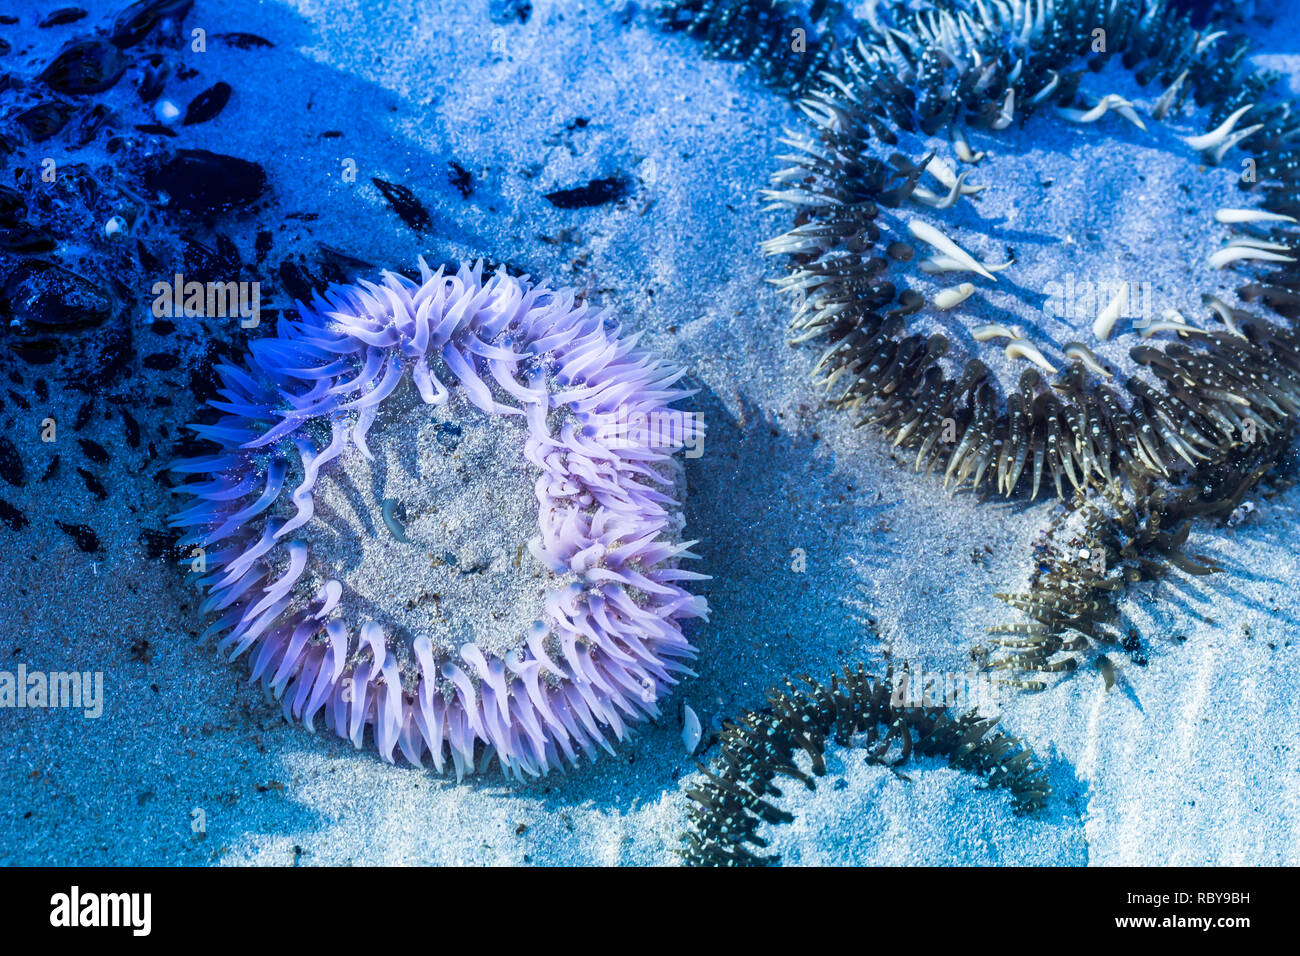 Sea Anemone close up under the sea - Image Stock Photo